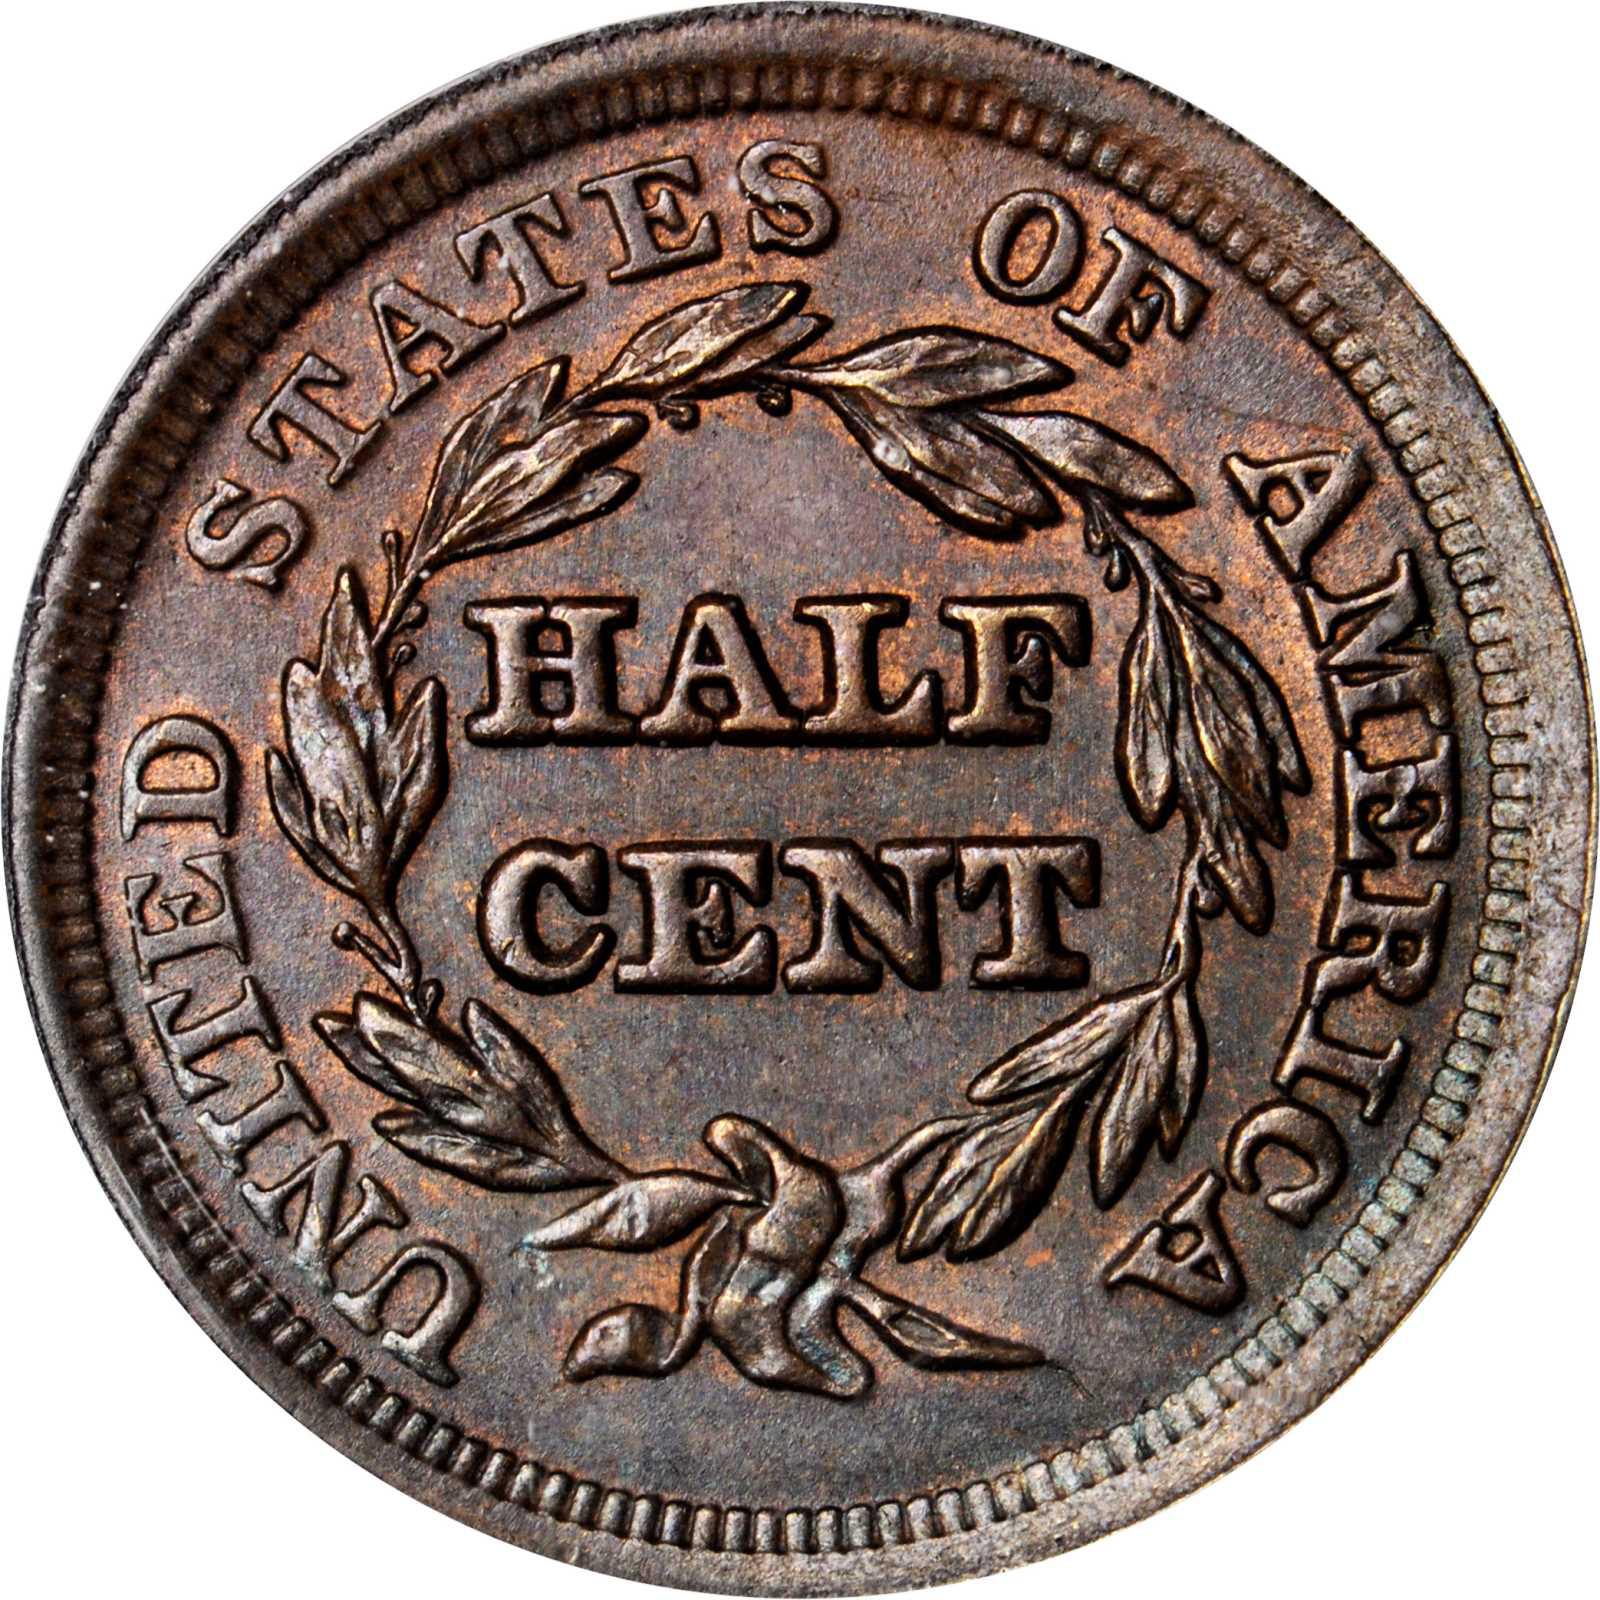 1853 Braided Hair Half Cent - NGC MS64 RB